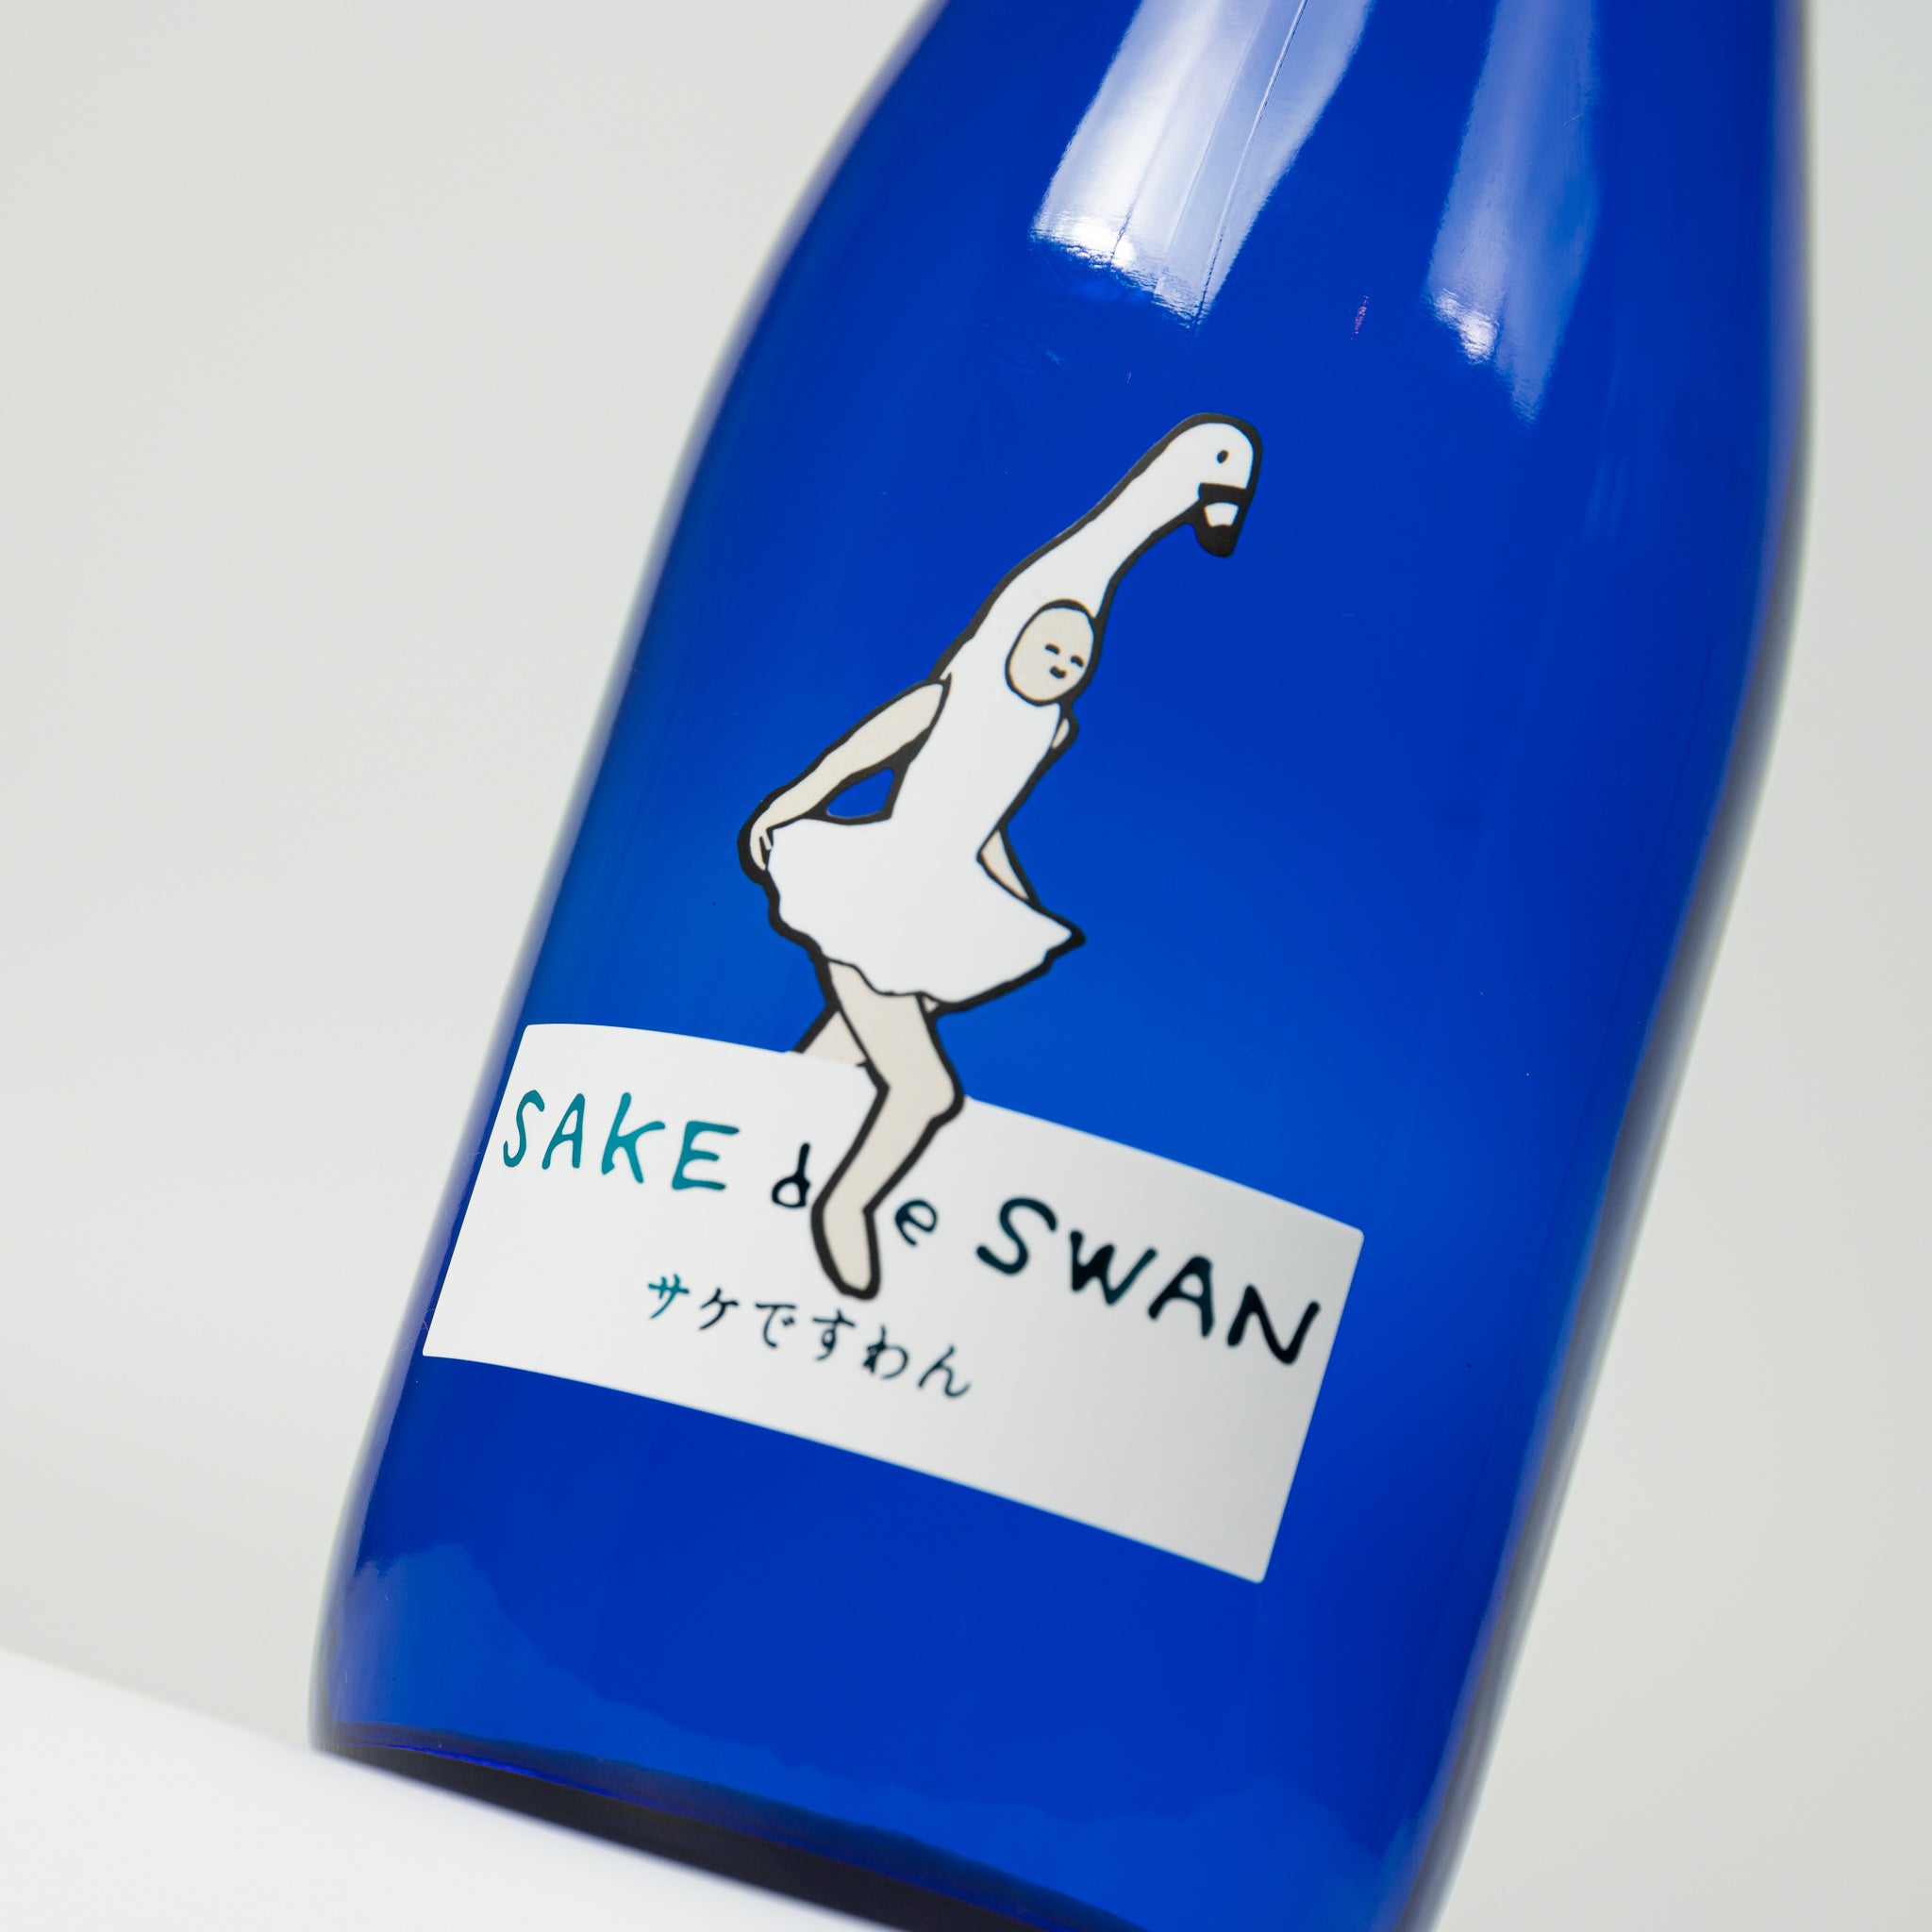 Sake de Swan